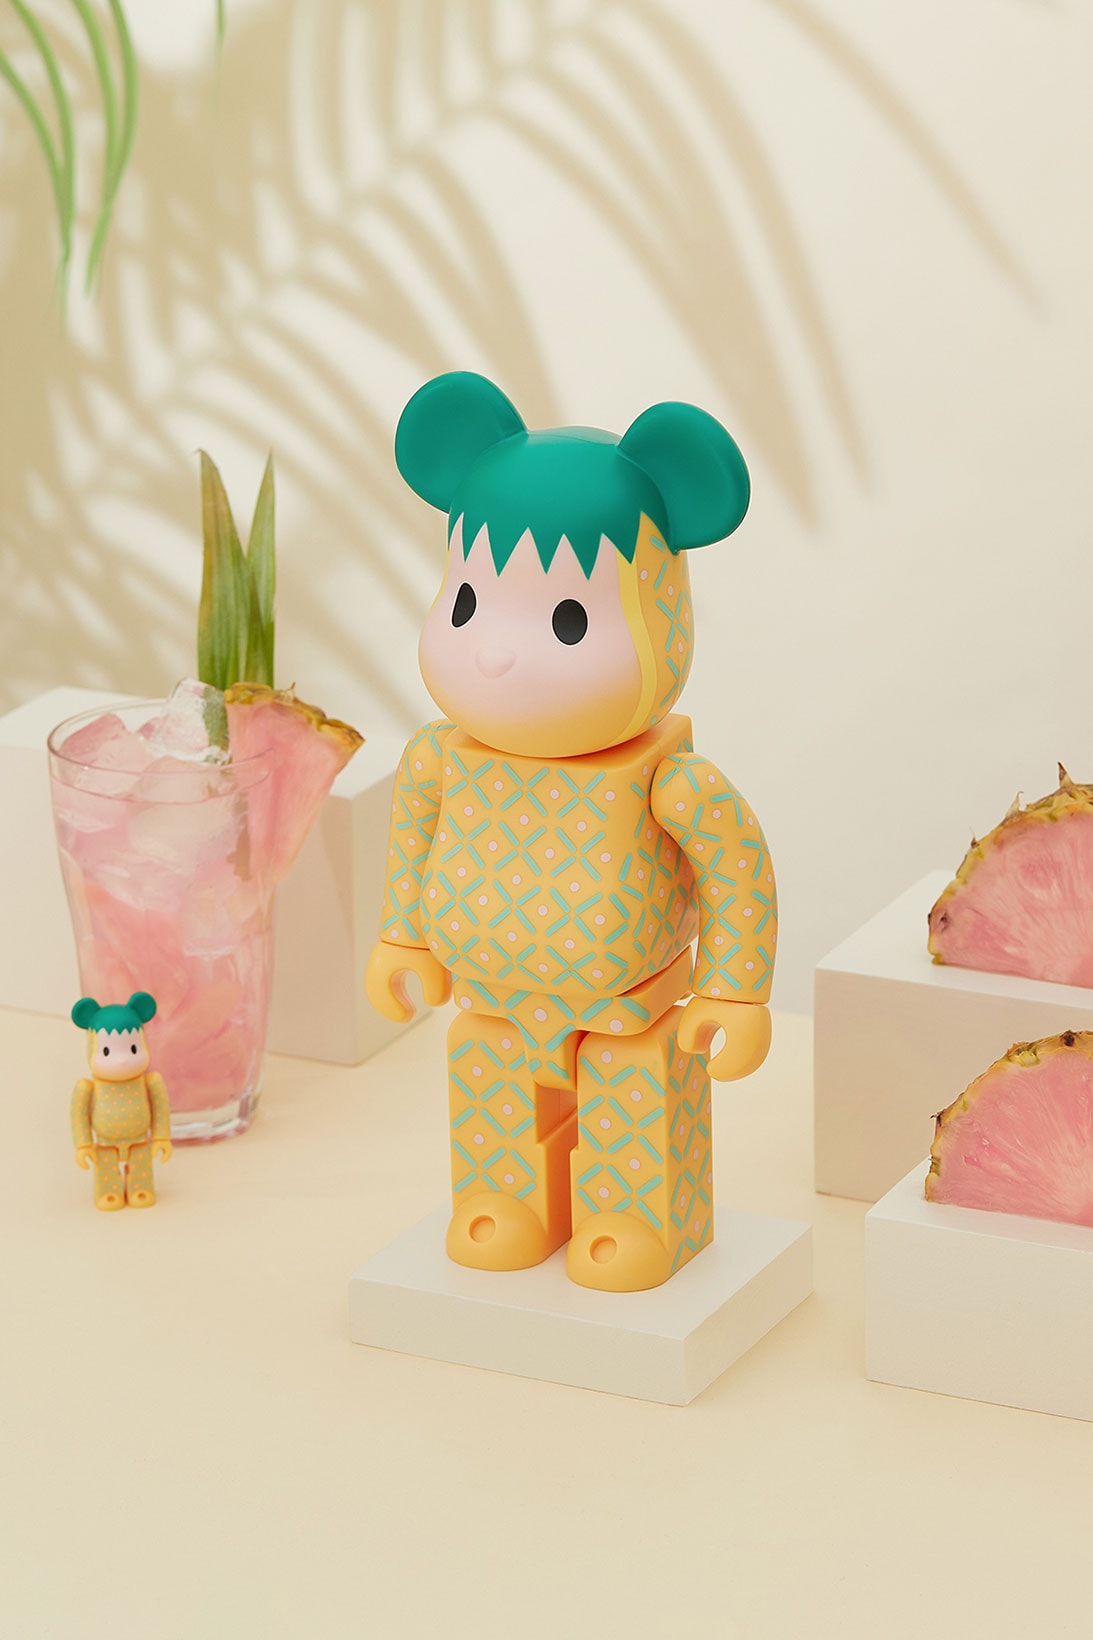 CLOT Medicom Toy Bearkbrick "Pink Pineapple" Summer Fruits Collaboration Release Info